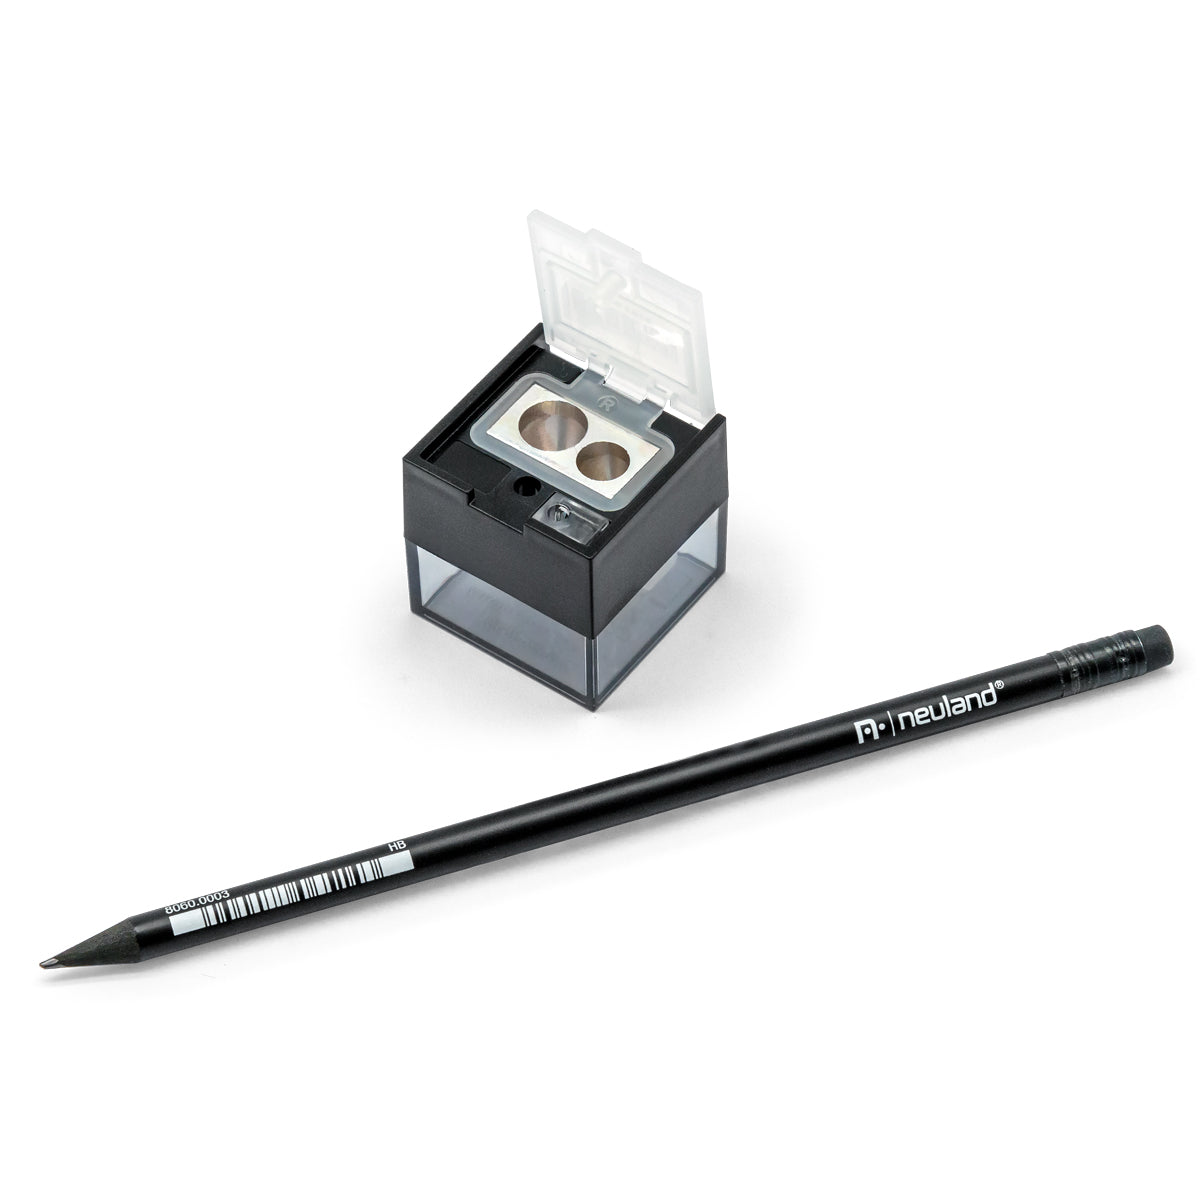 KUM® CUB3 – pencil sharpener